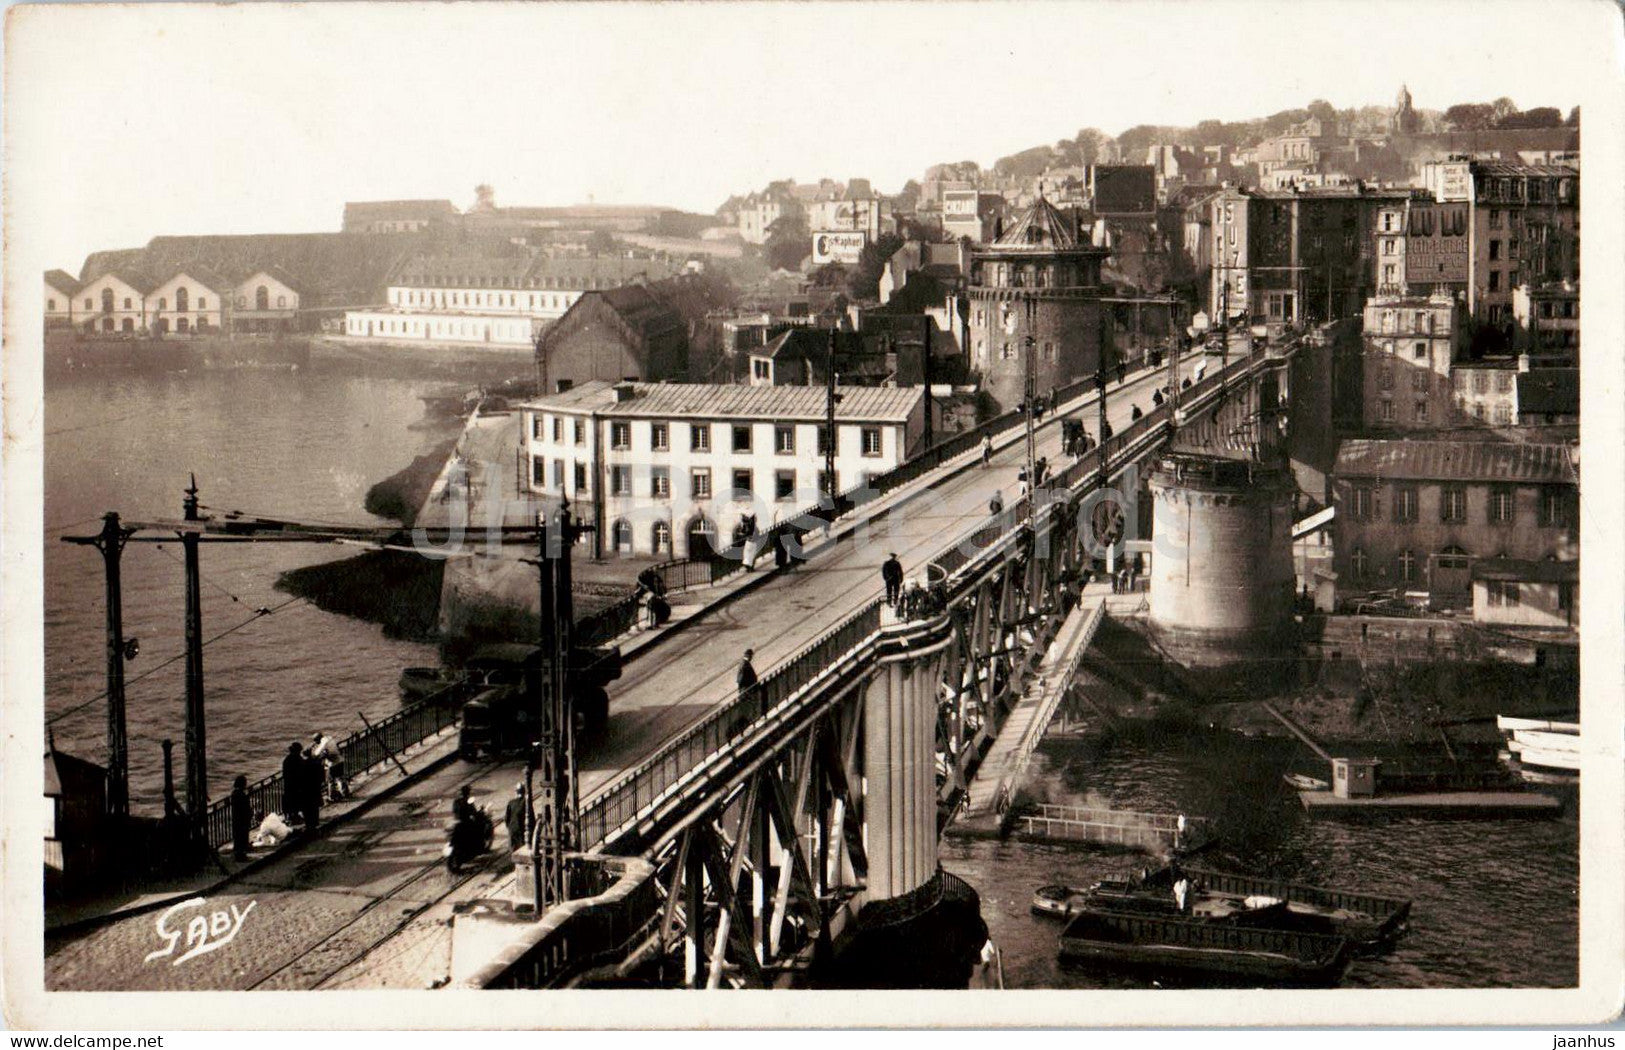 Brest - Pont National vers Recouvrance - bridge - 29 - old postcard - France - unused - JH Postcards